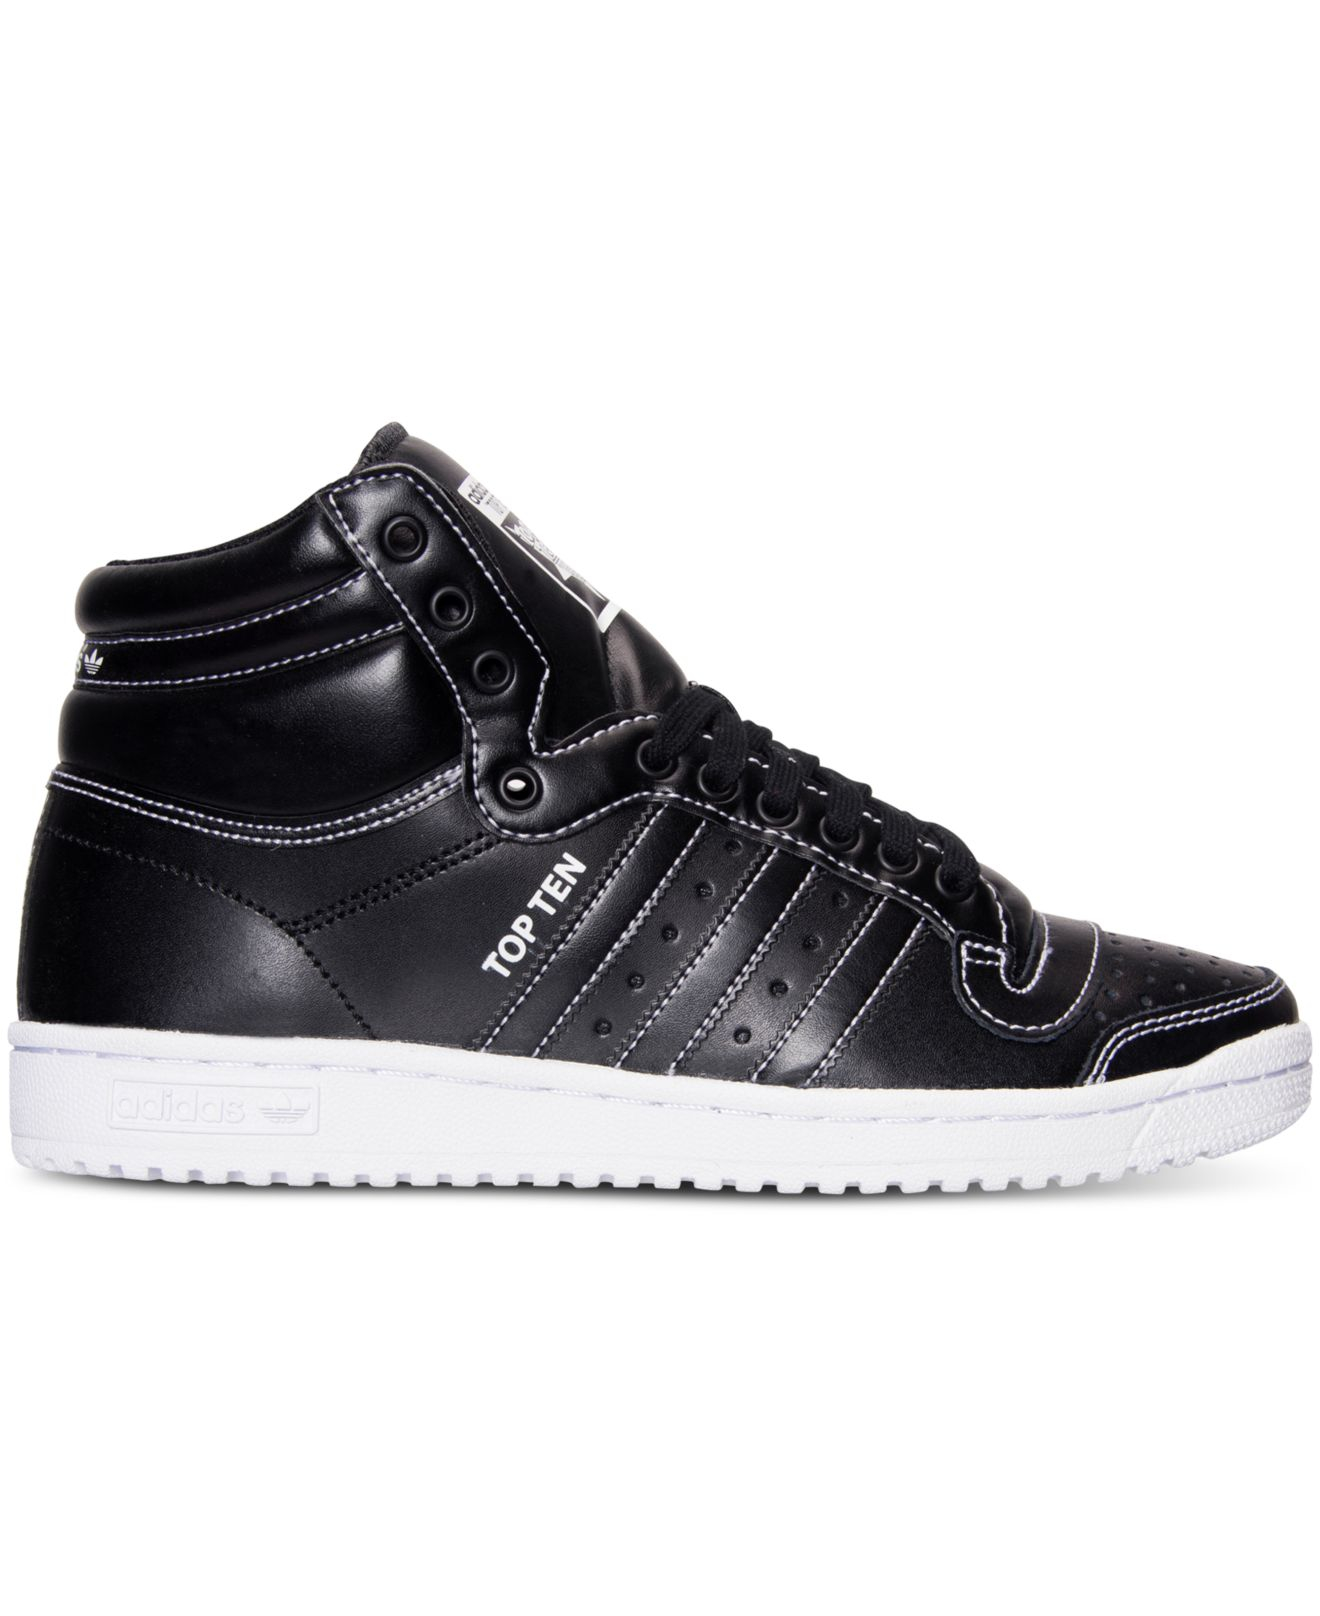 Adidas Originals Leather Mens Top Ten Hi Casual Sneakers From Finish